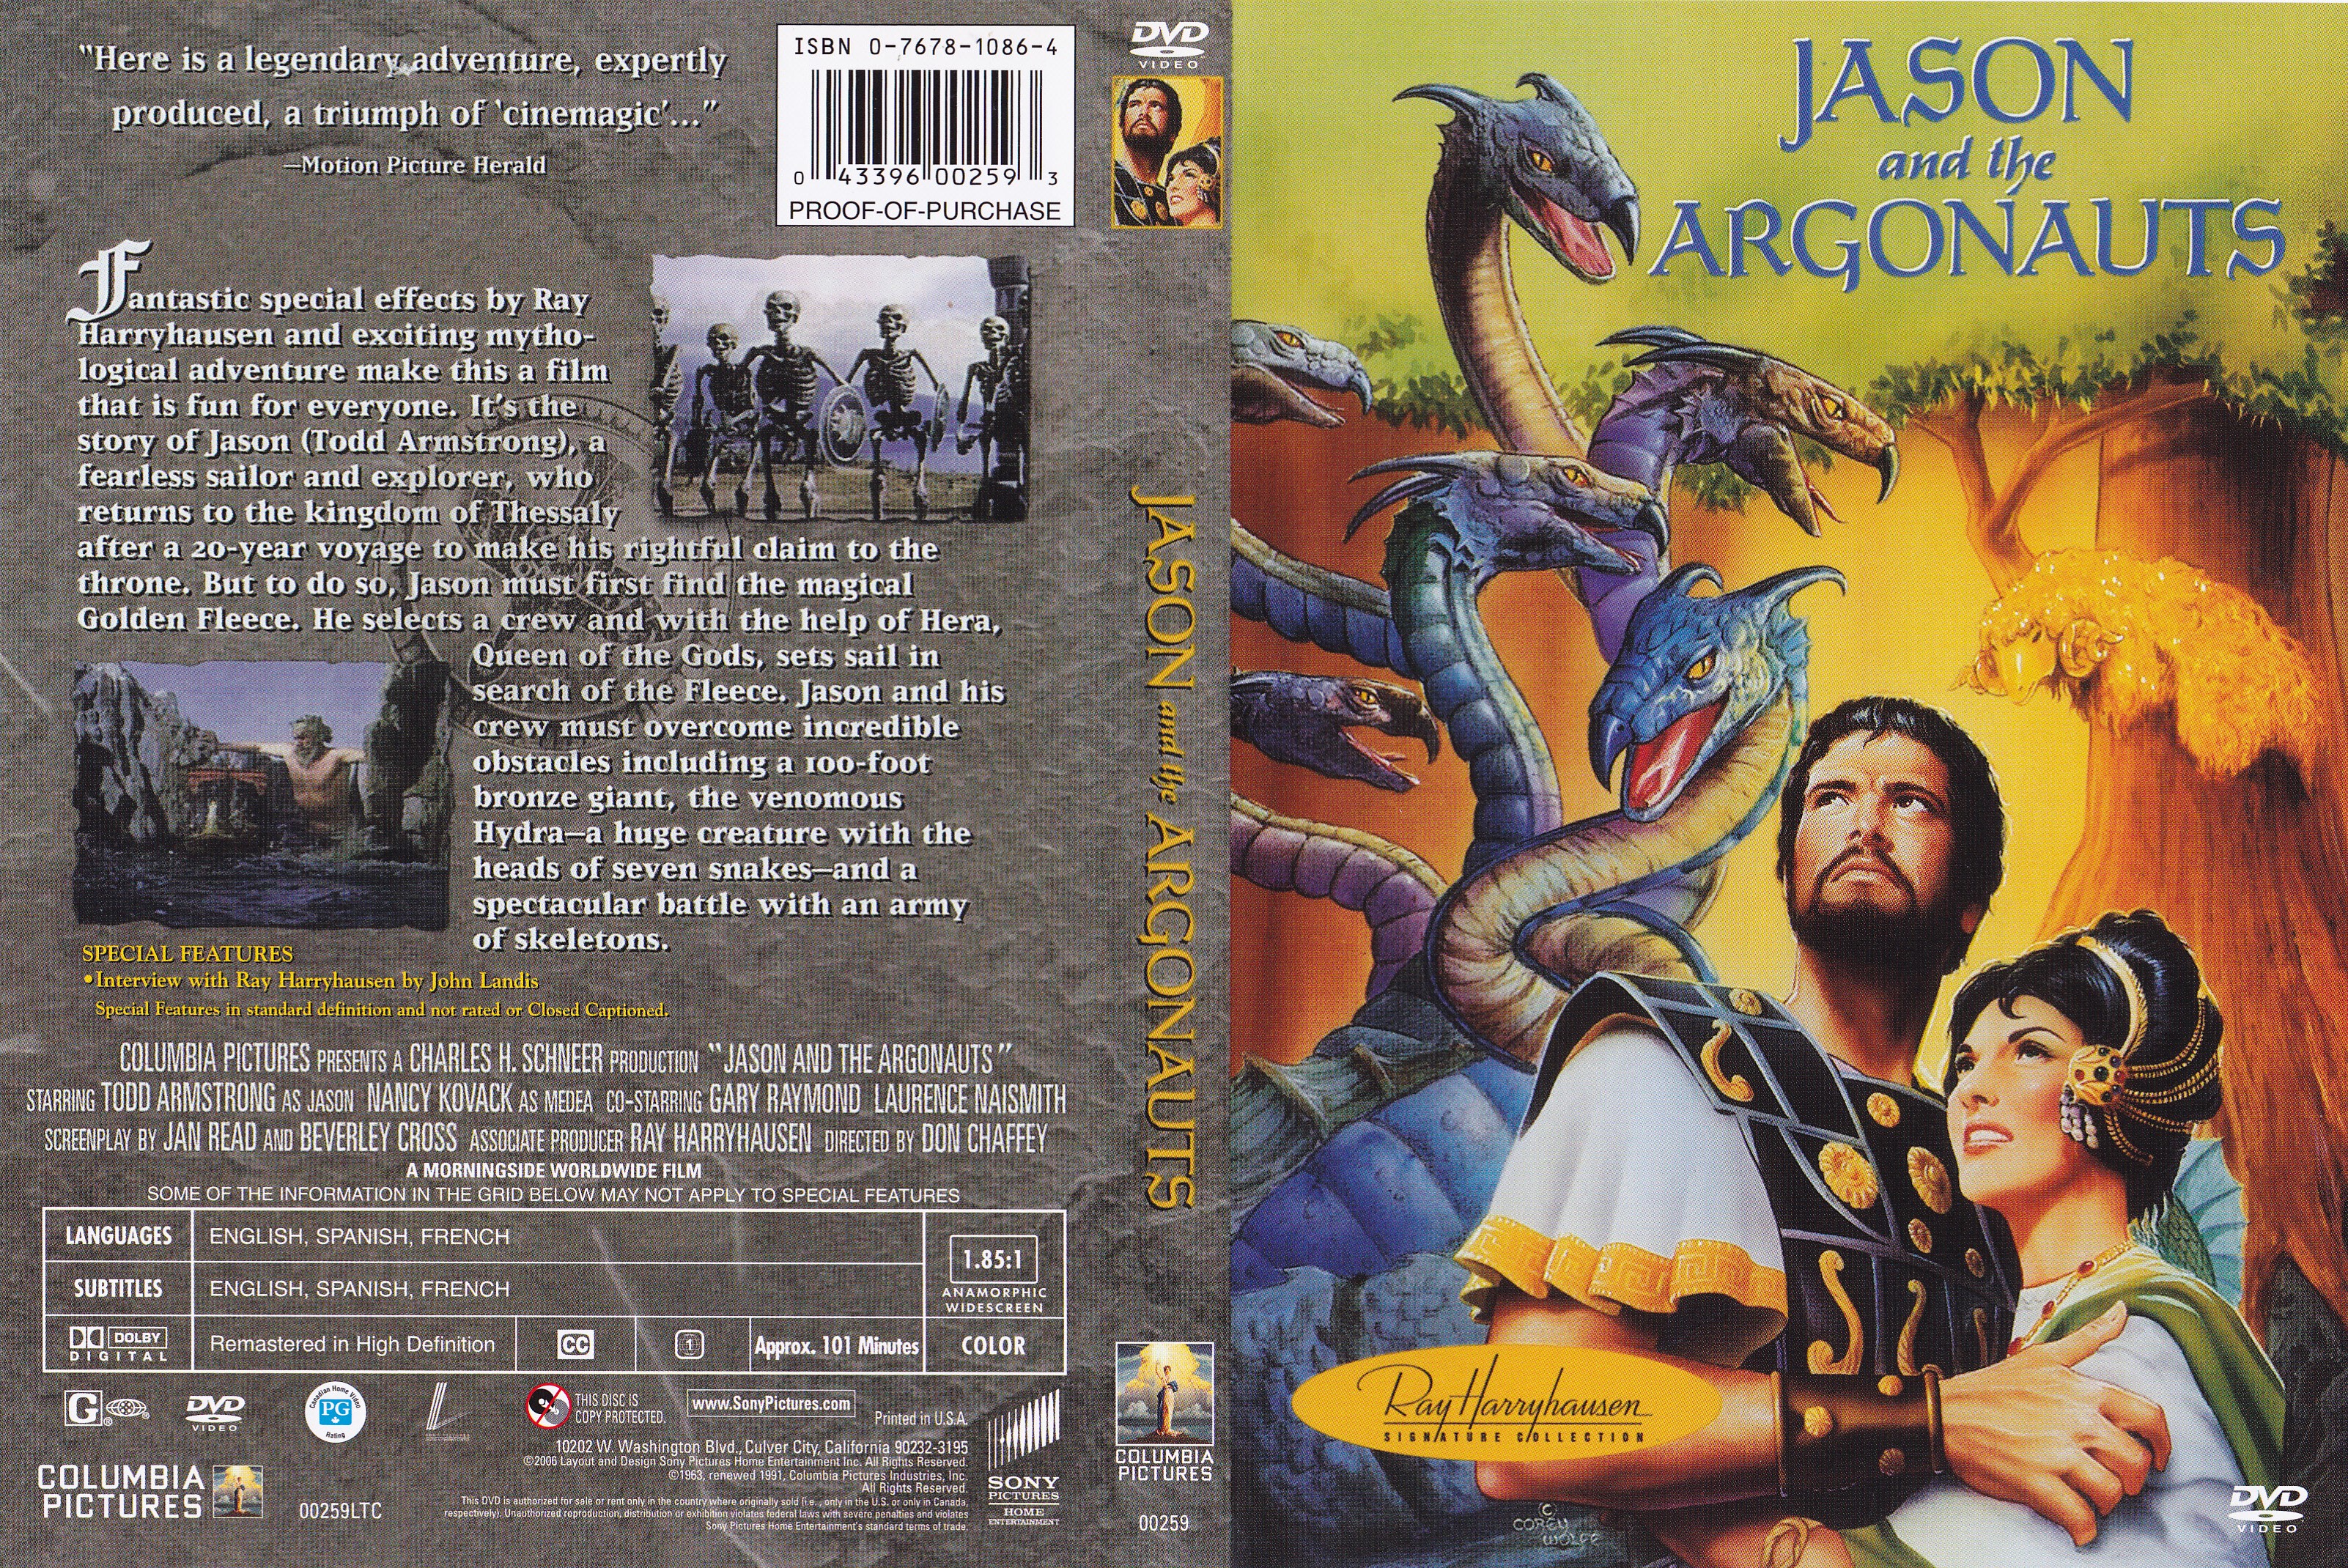 Jaquette DVD Jason and the argonauts (Canadienne)